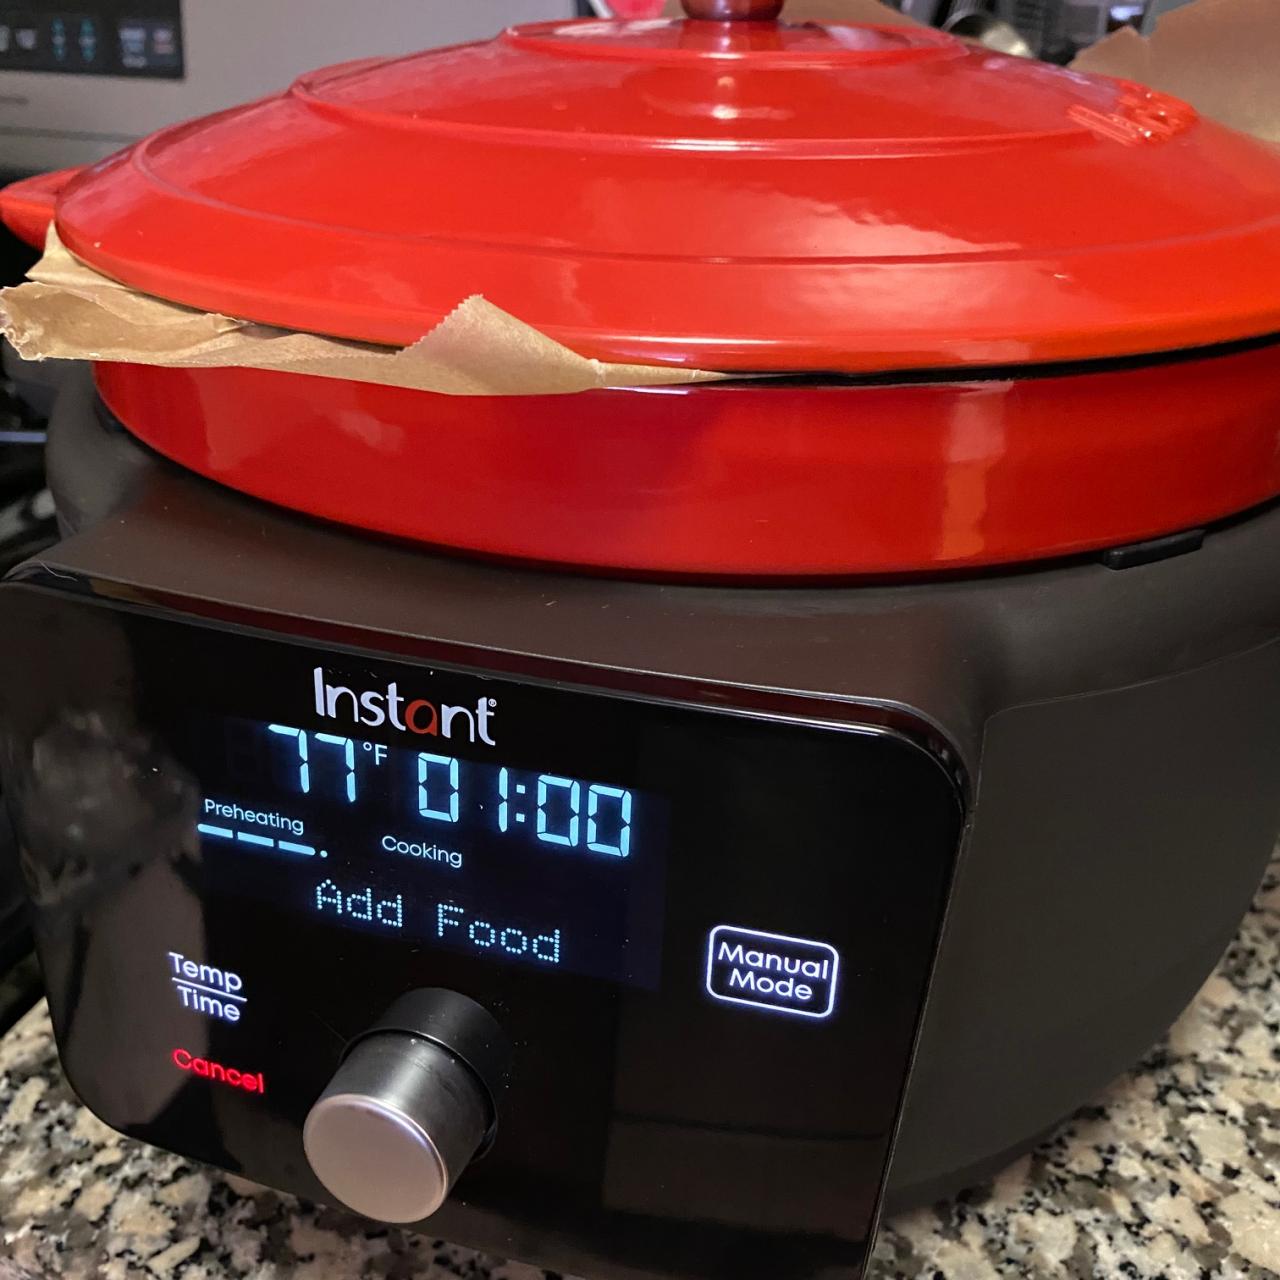 Instant Pot, Precision Dutch Oven - Zola